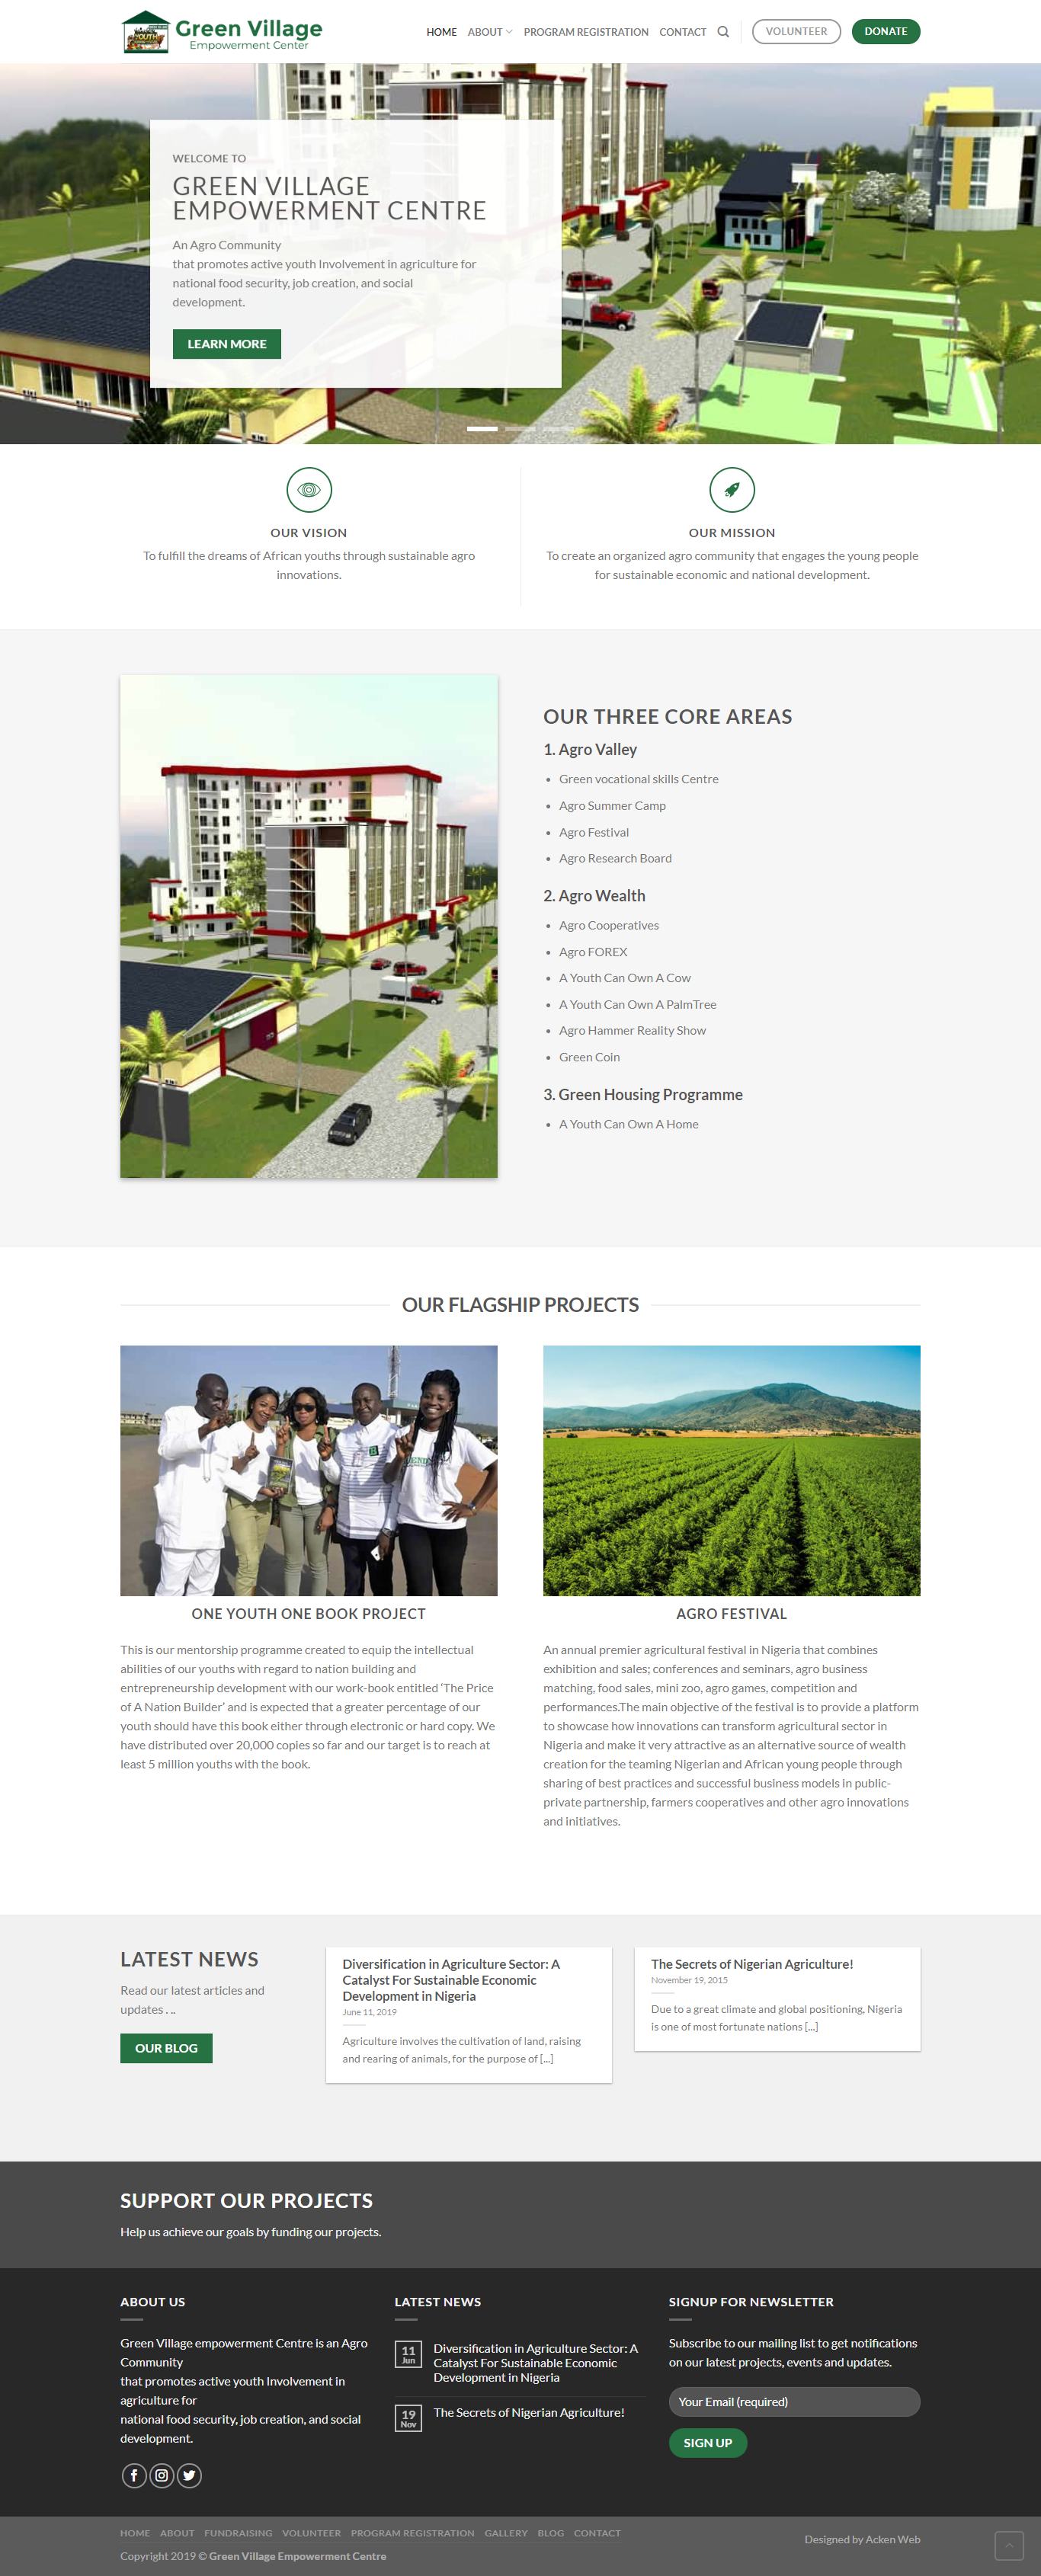 green village empowerment center